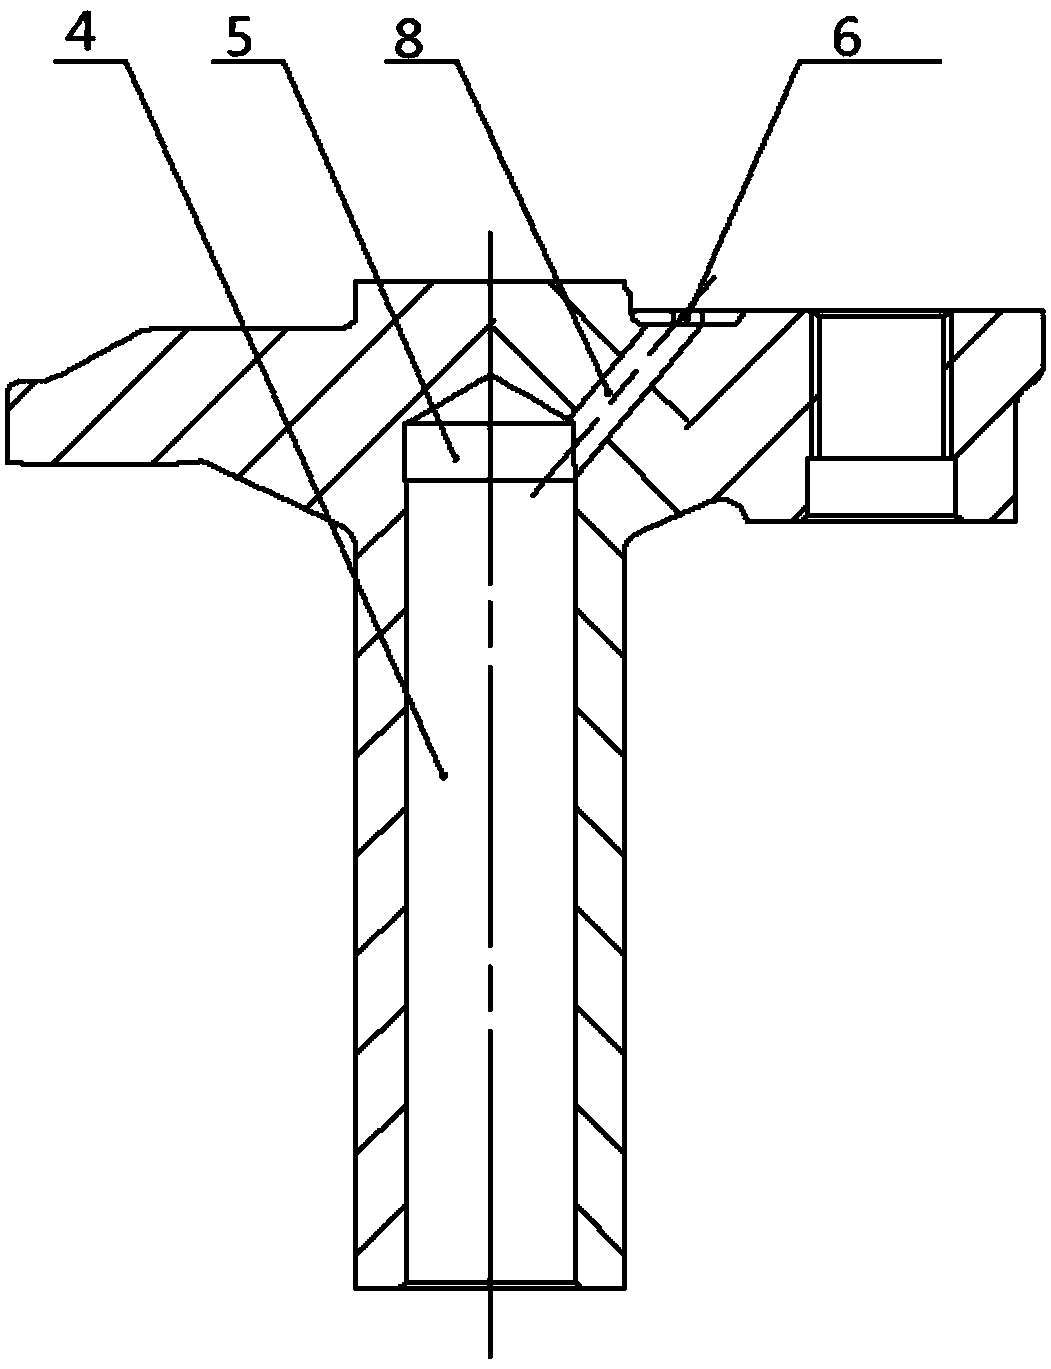 Air valve bridge with increased pilot fit length